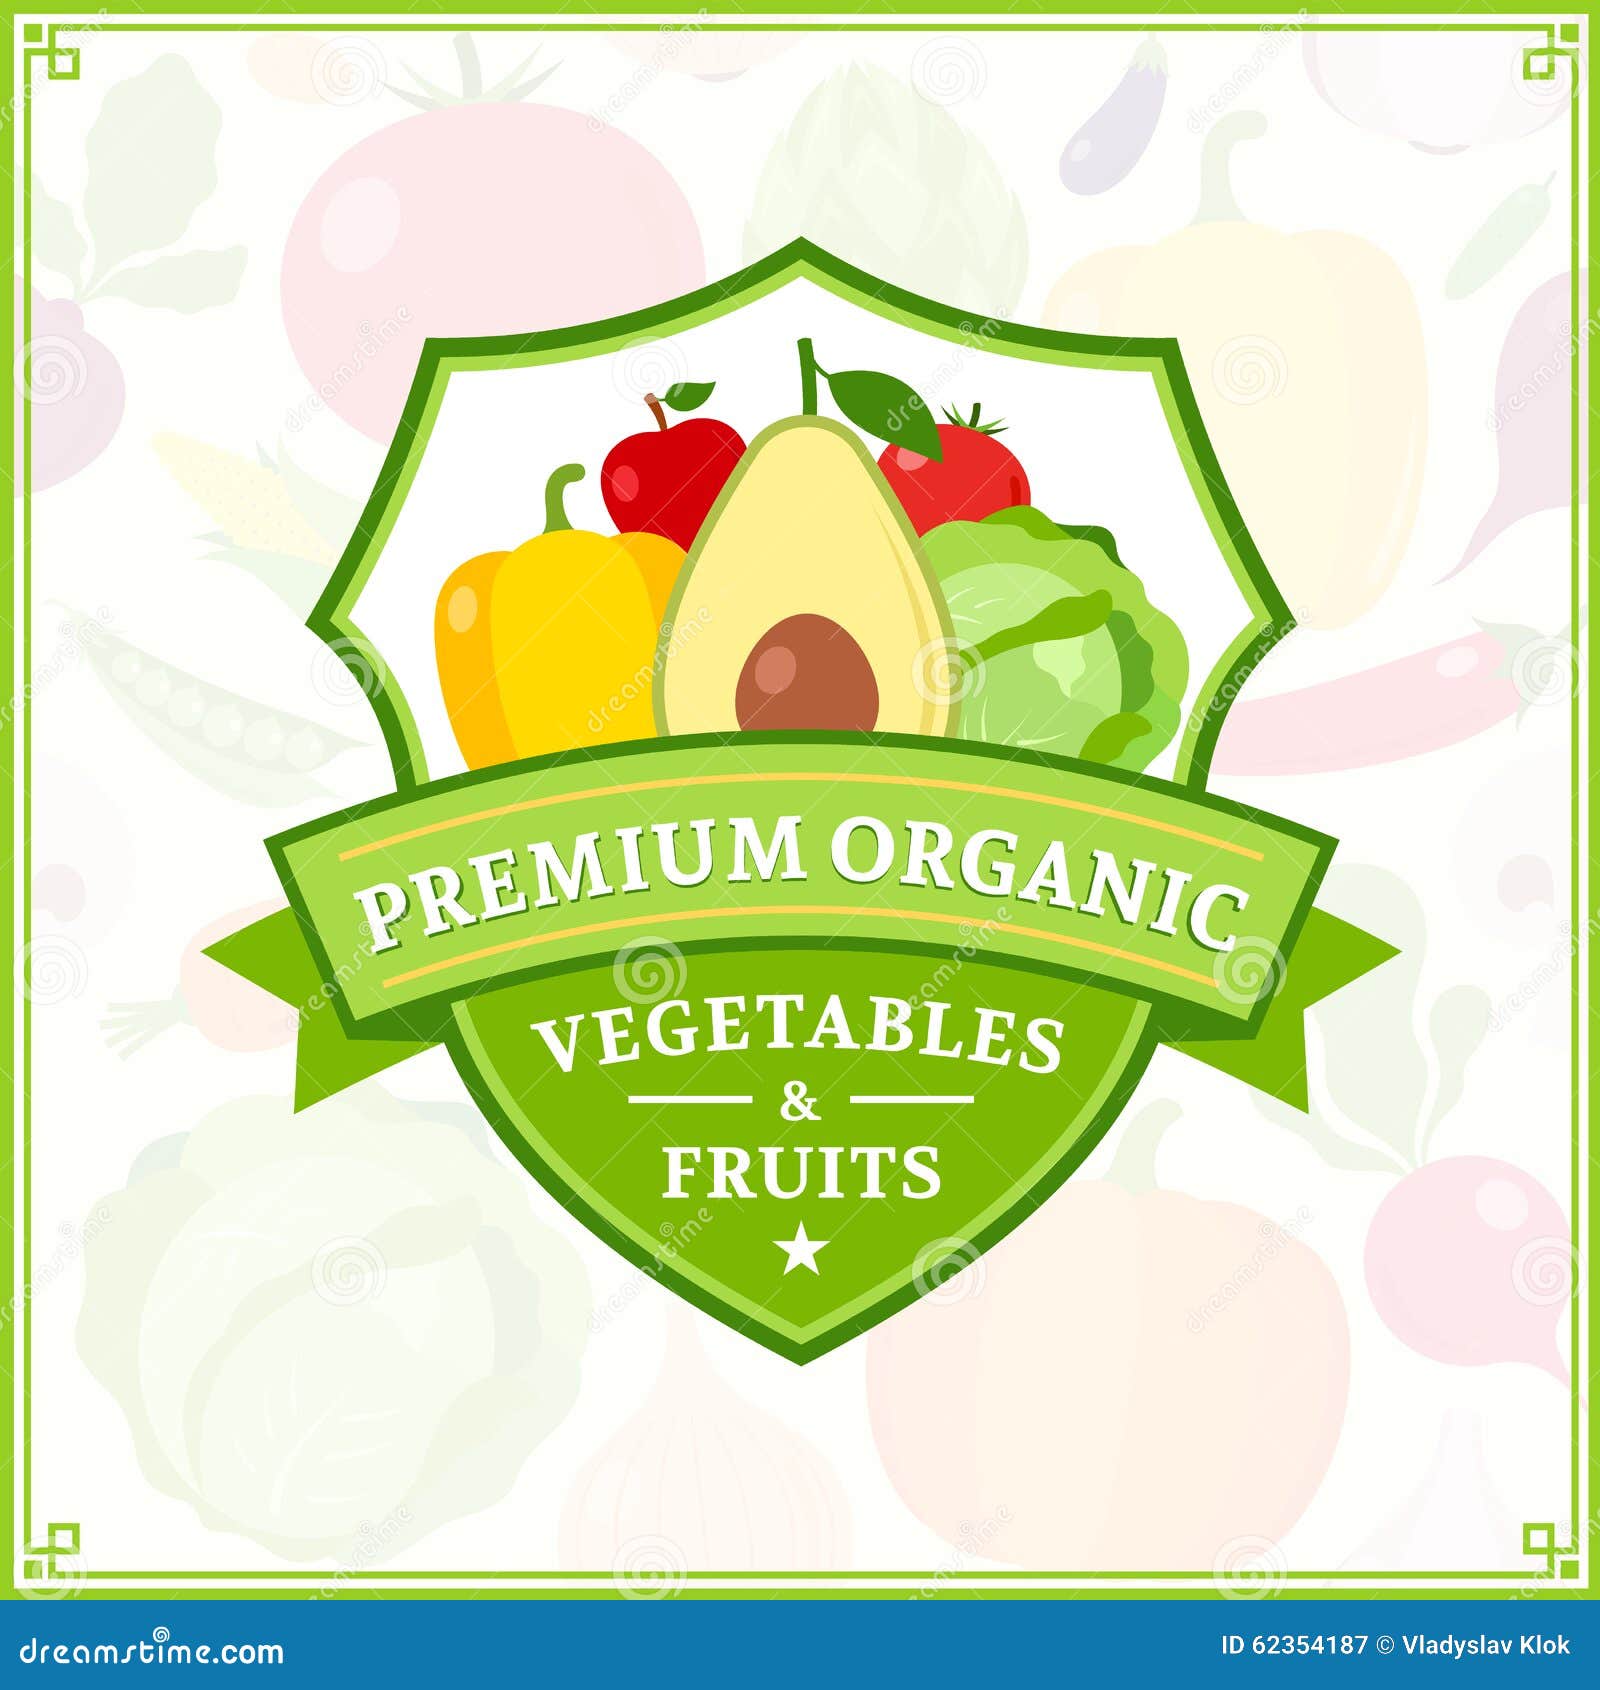 Vegetables & Fruits Heart Logo Illustrations